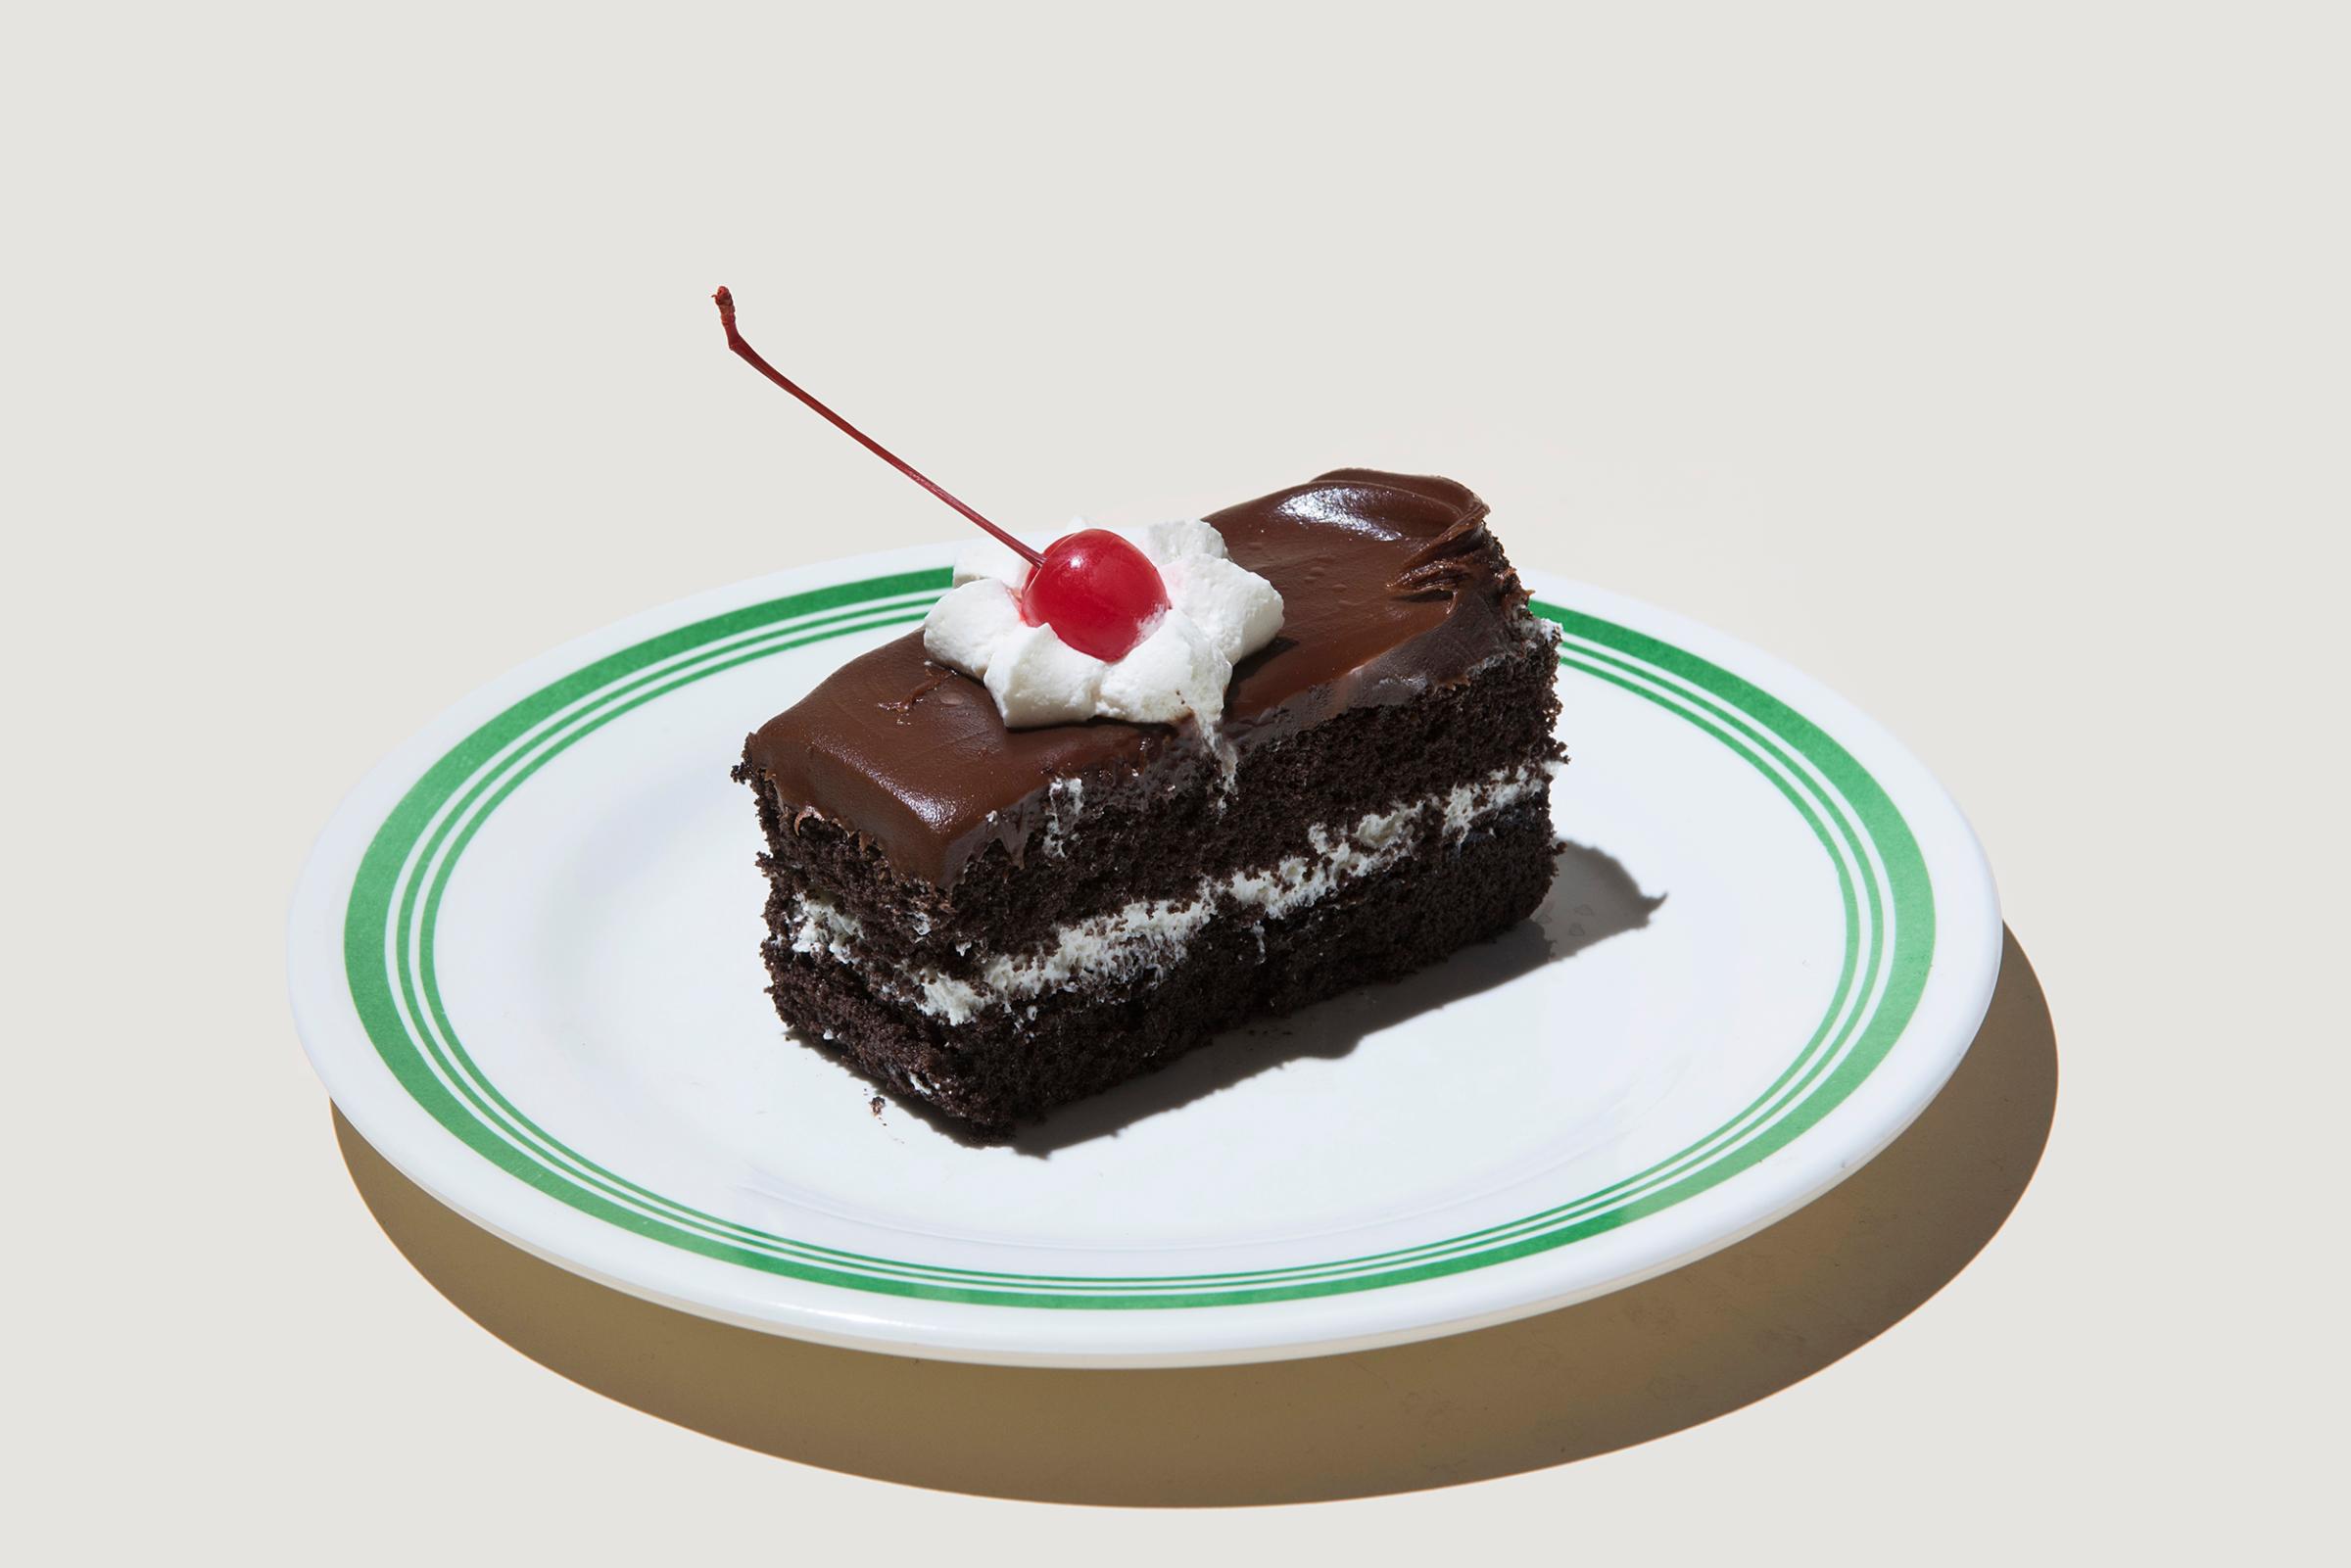 cake-dessert-sweets-food-diet-health-motto-stock